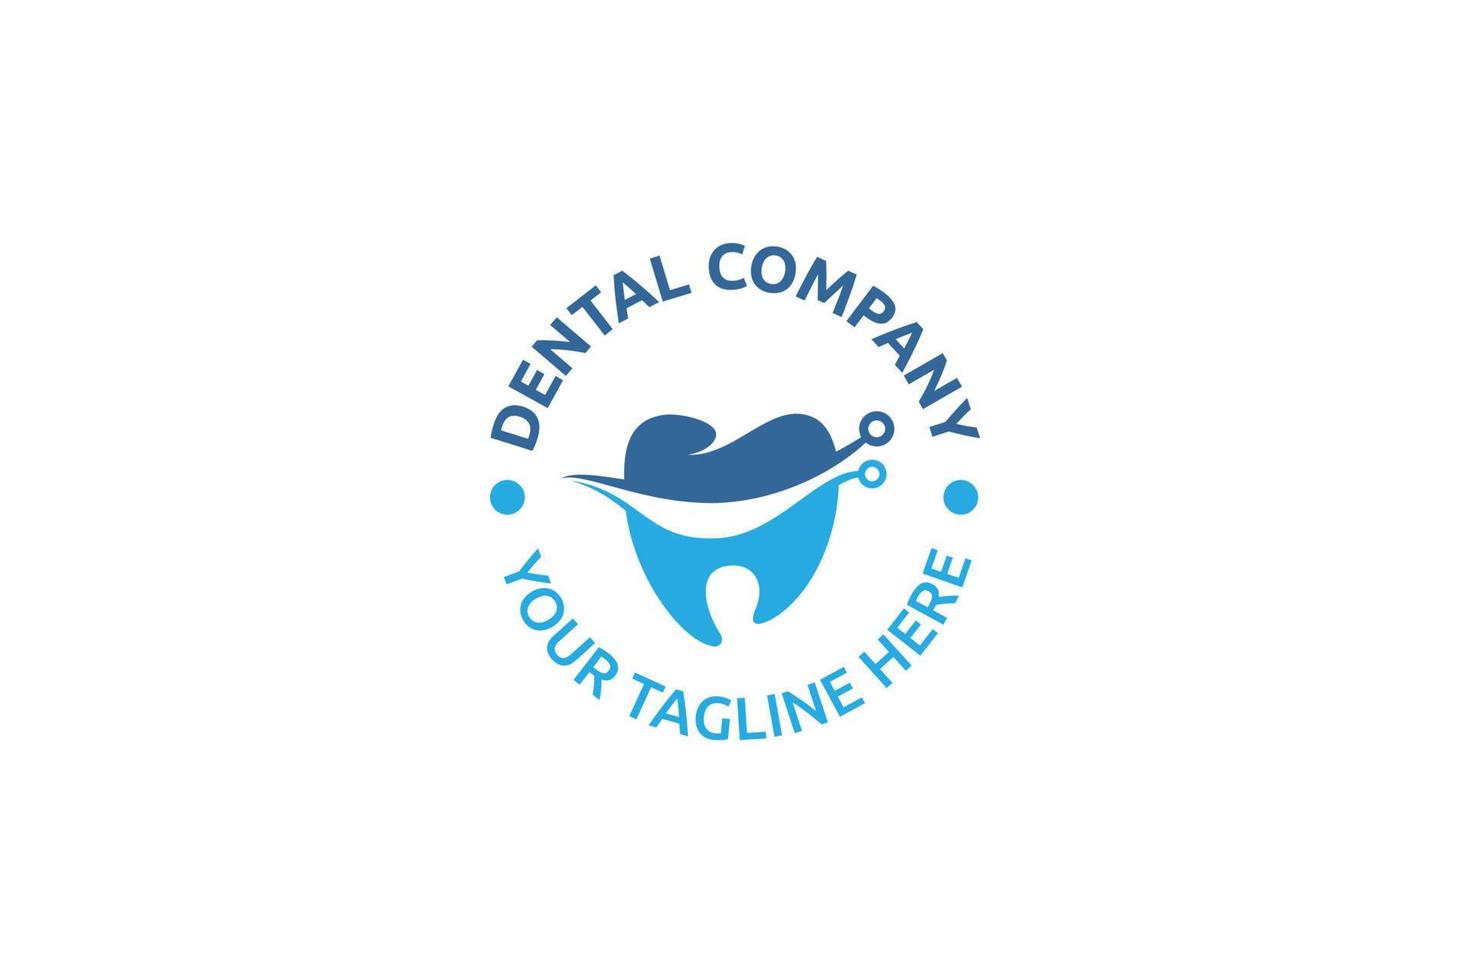 dental technology logo for any business especially for dental care, technology, laboratory, dental office, etc. vector